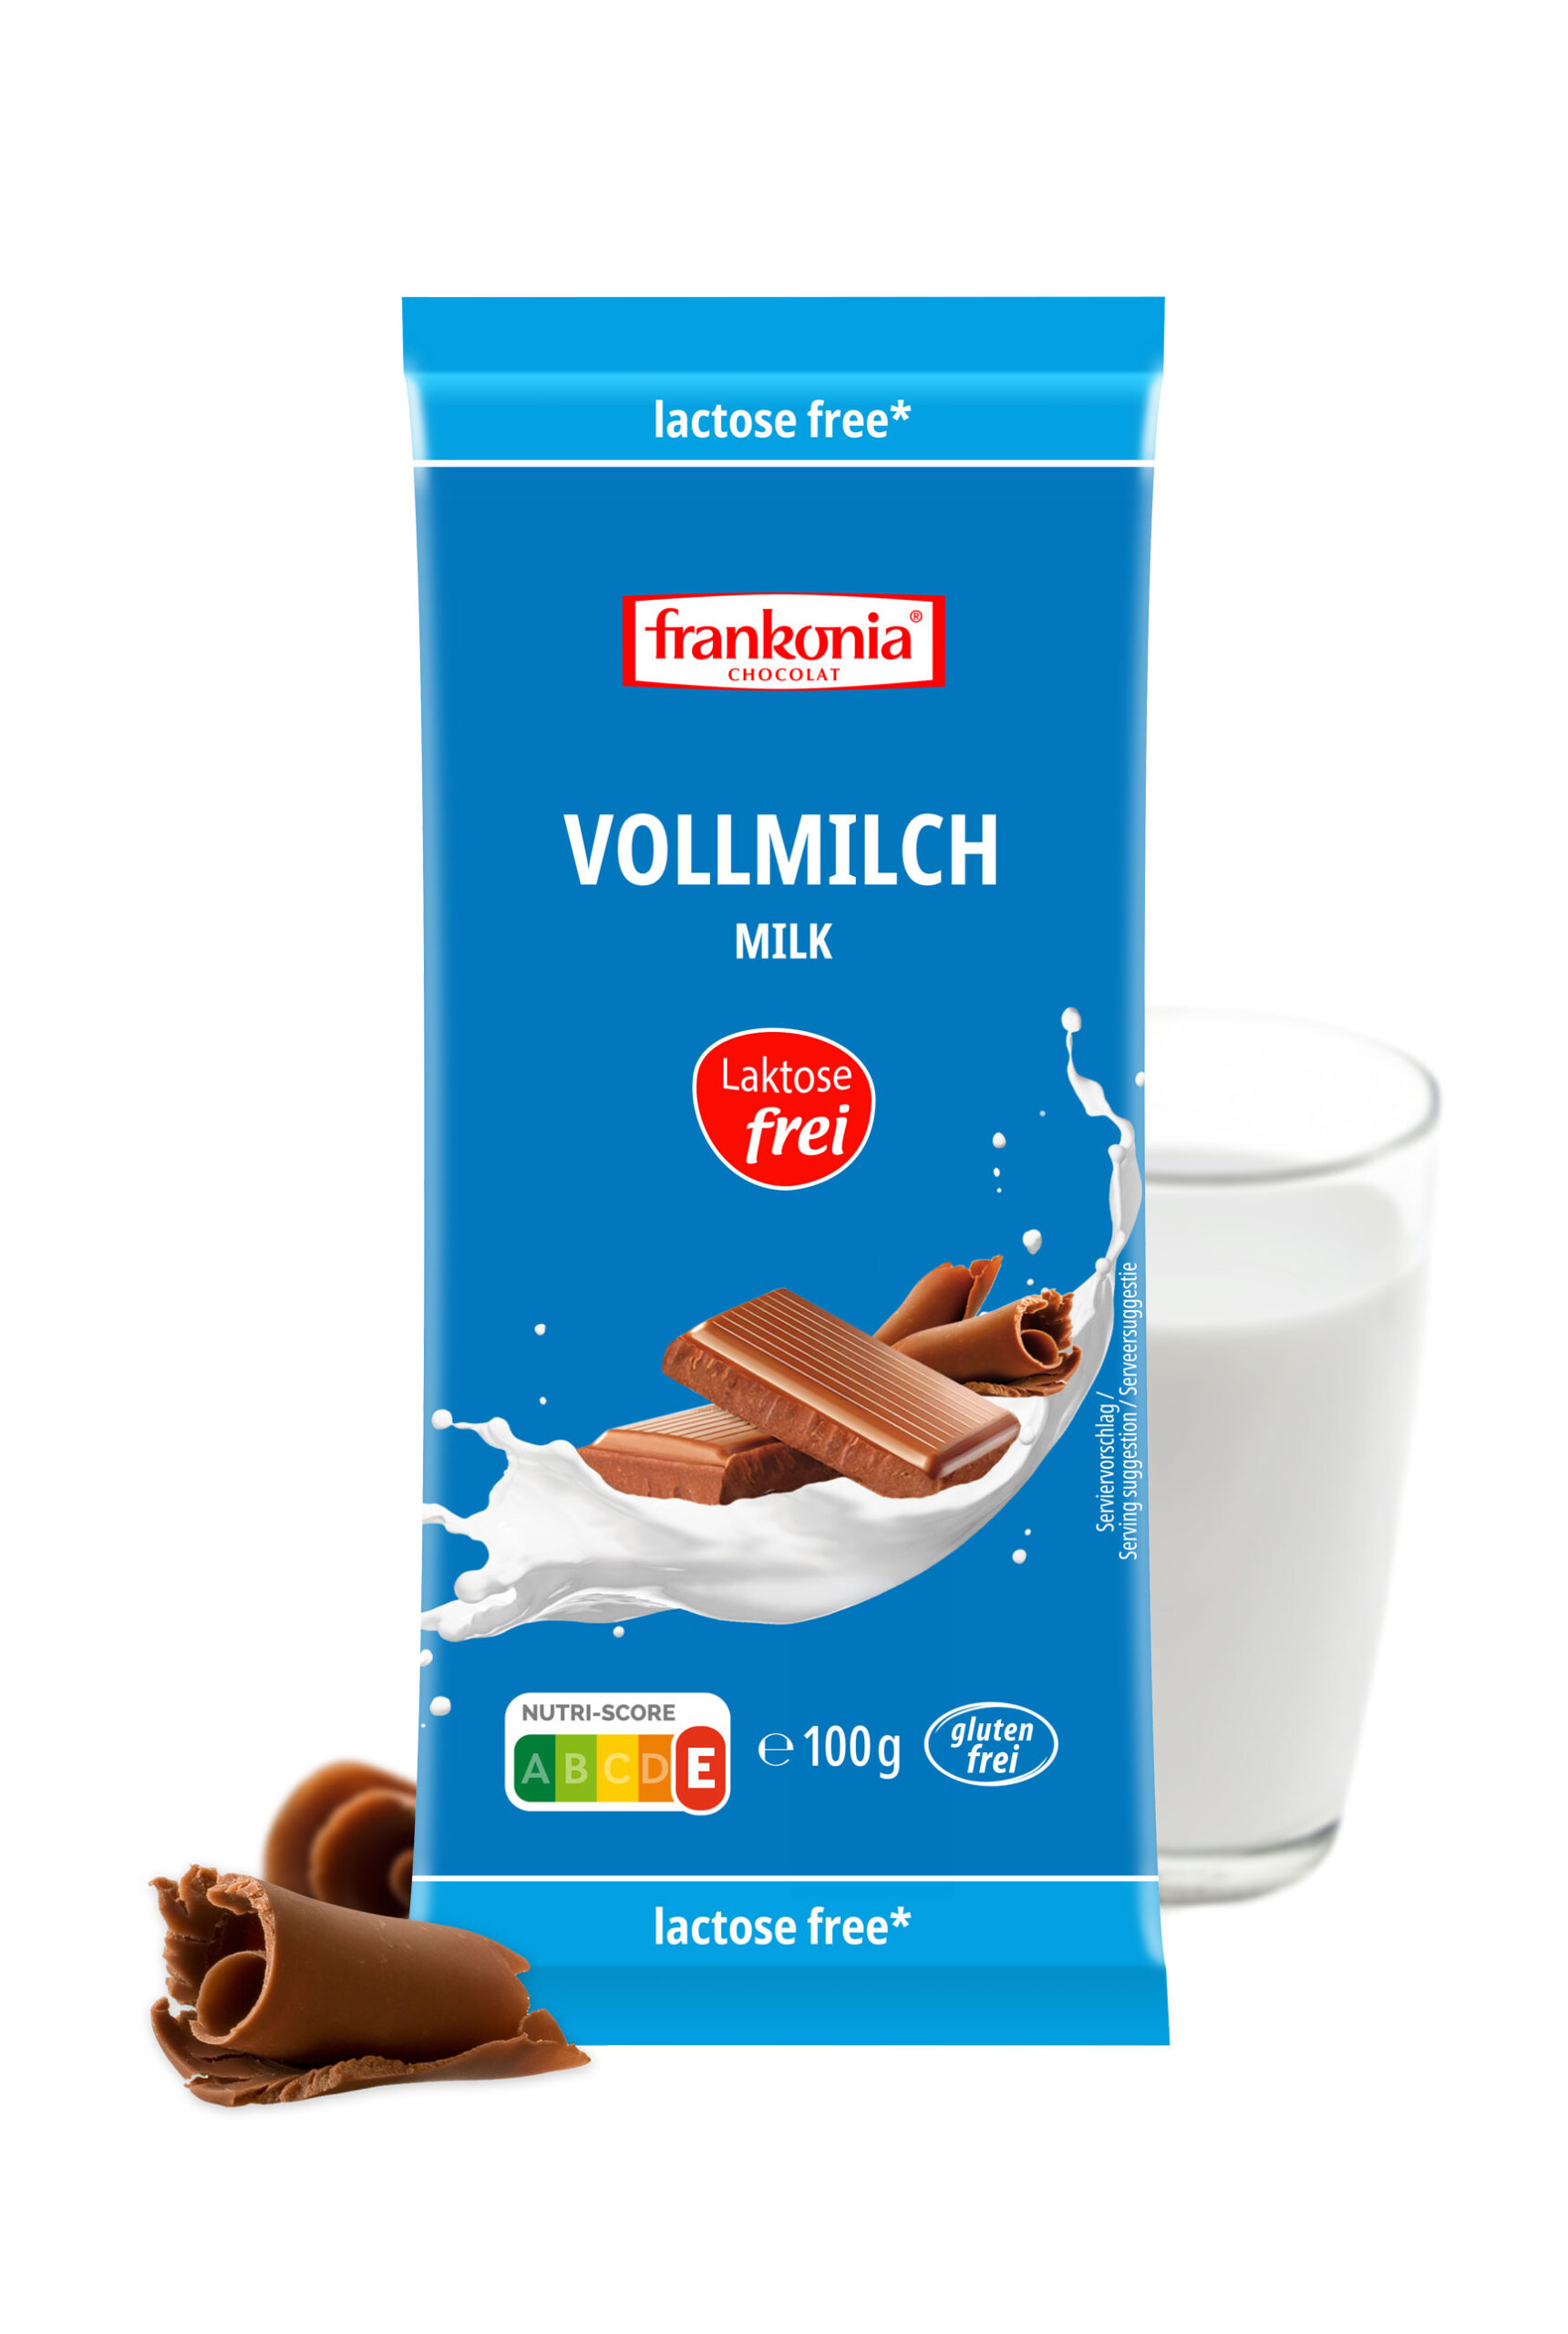 Vollmilch laktosefrei* - Frankonia Schokoladenwerke